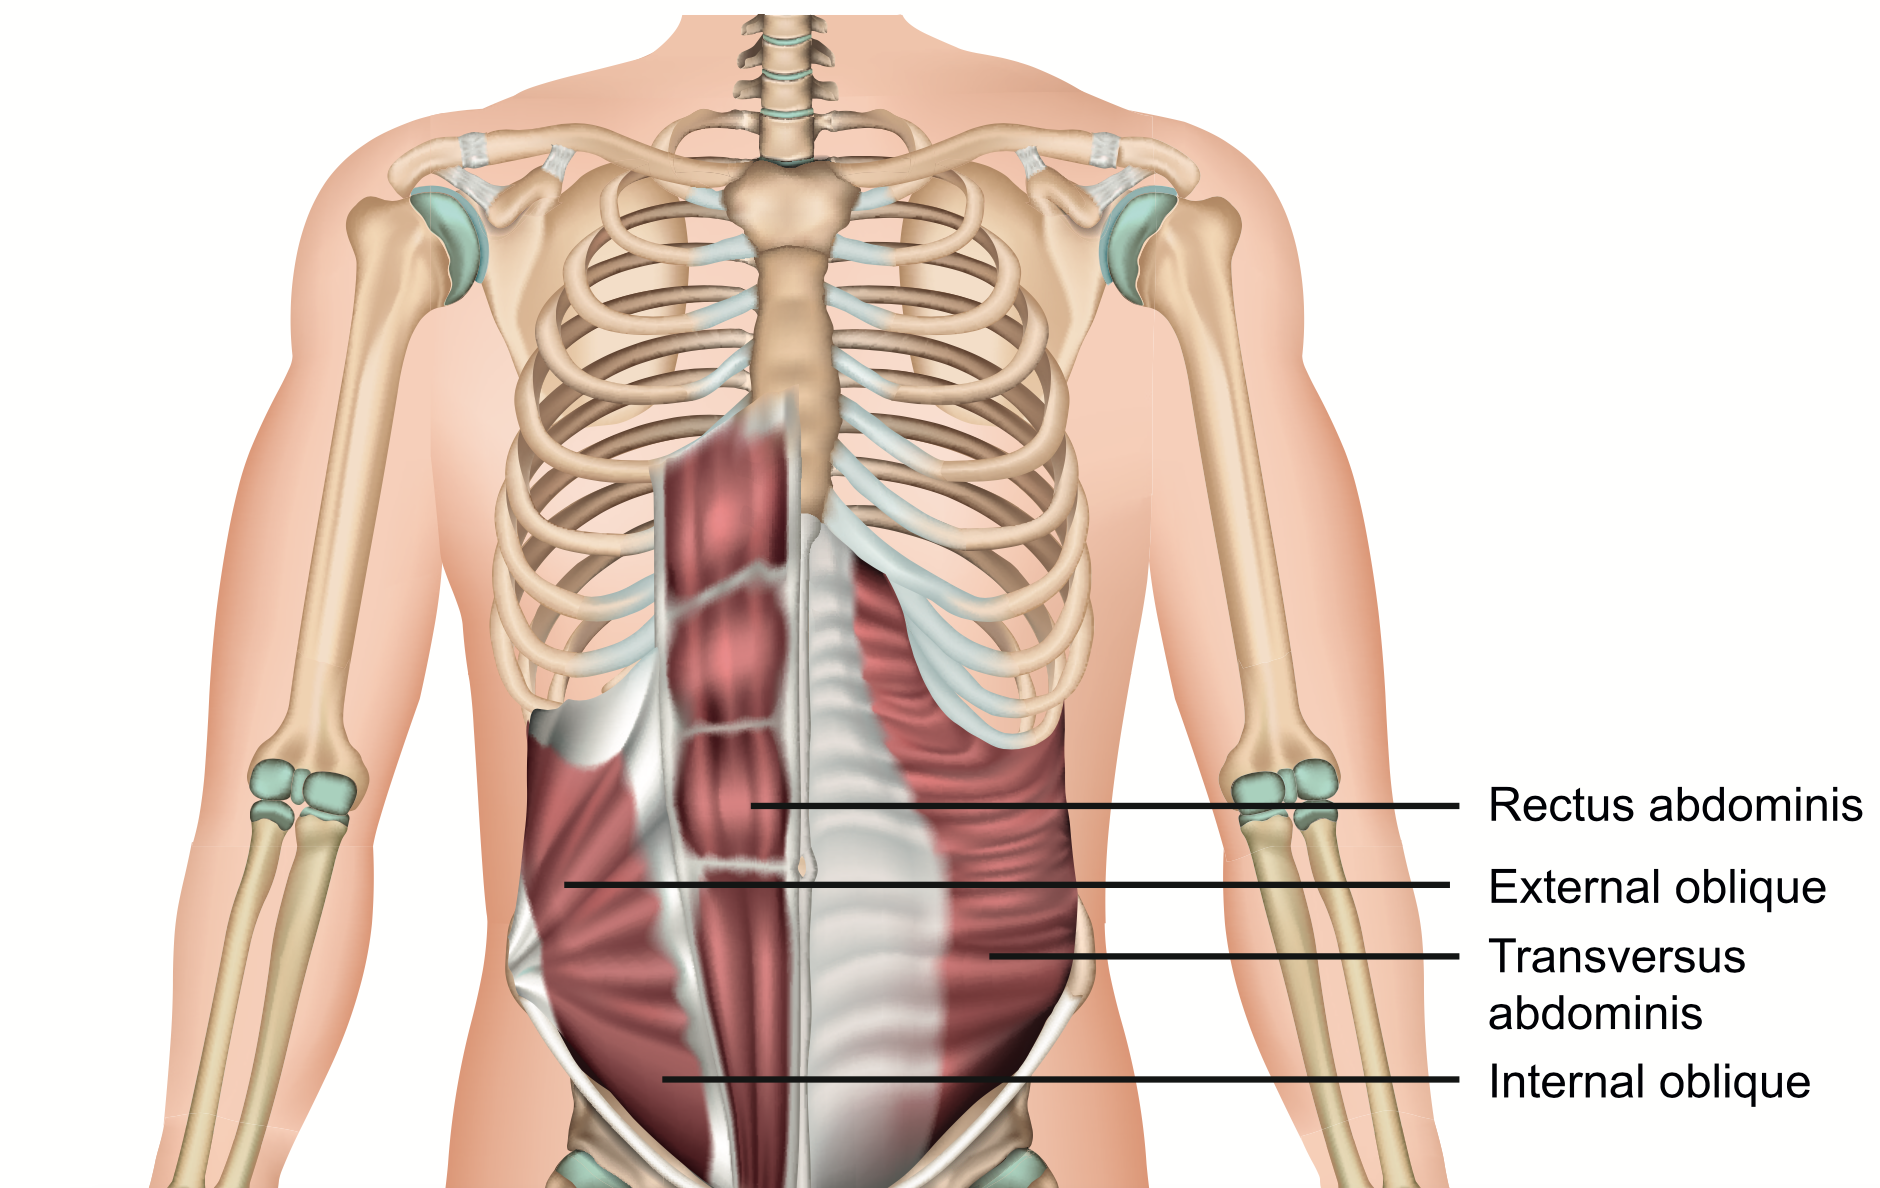 abdominal wall anatomy